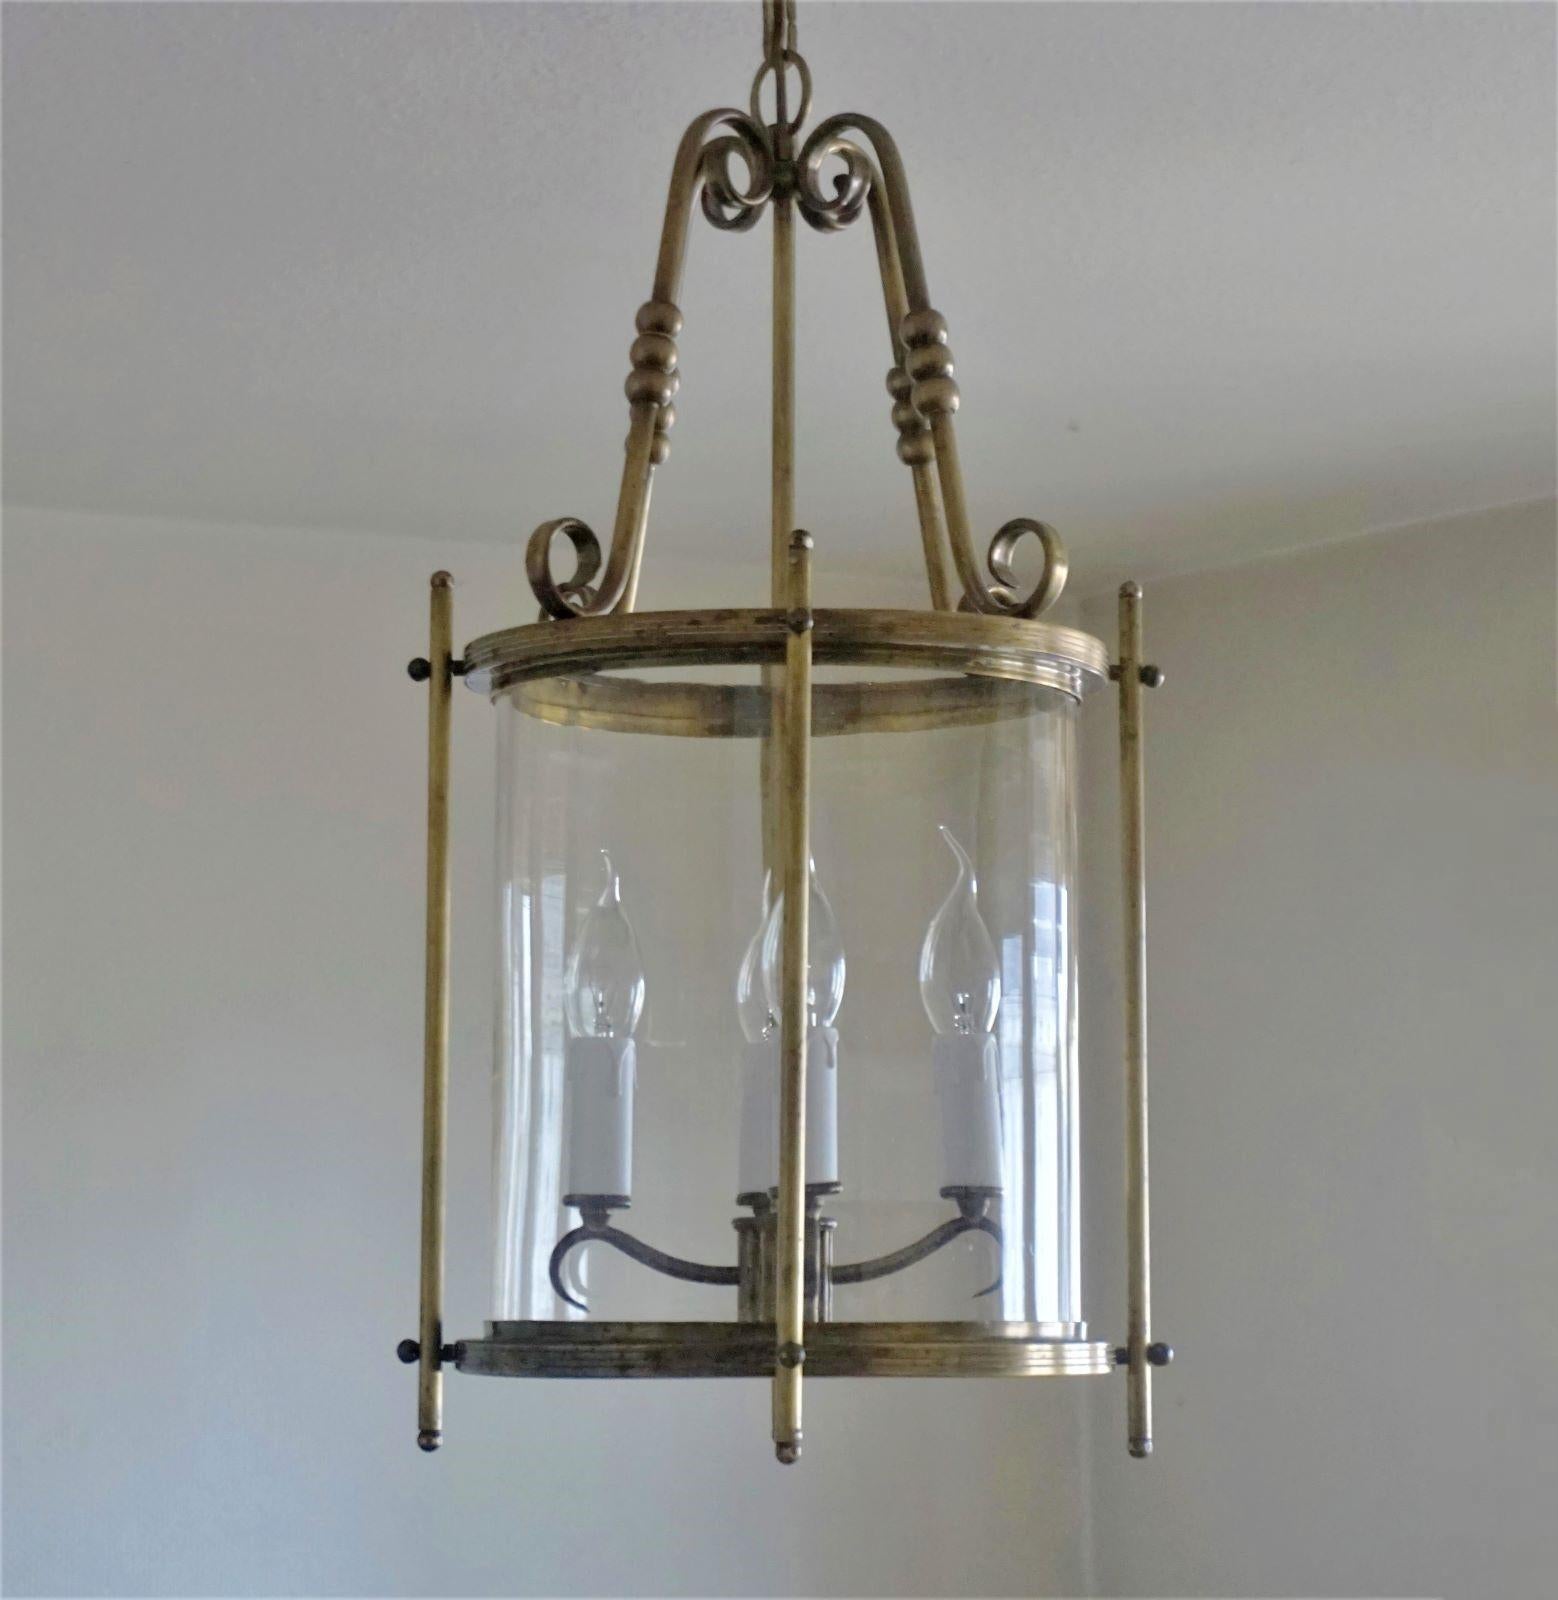 1930s lantern